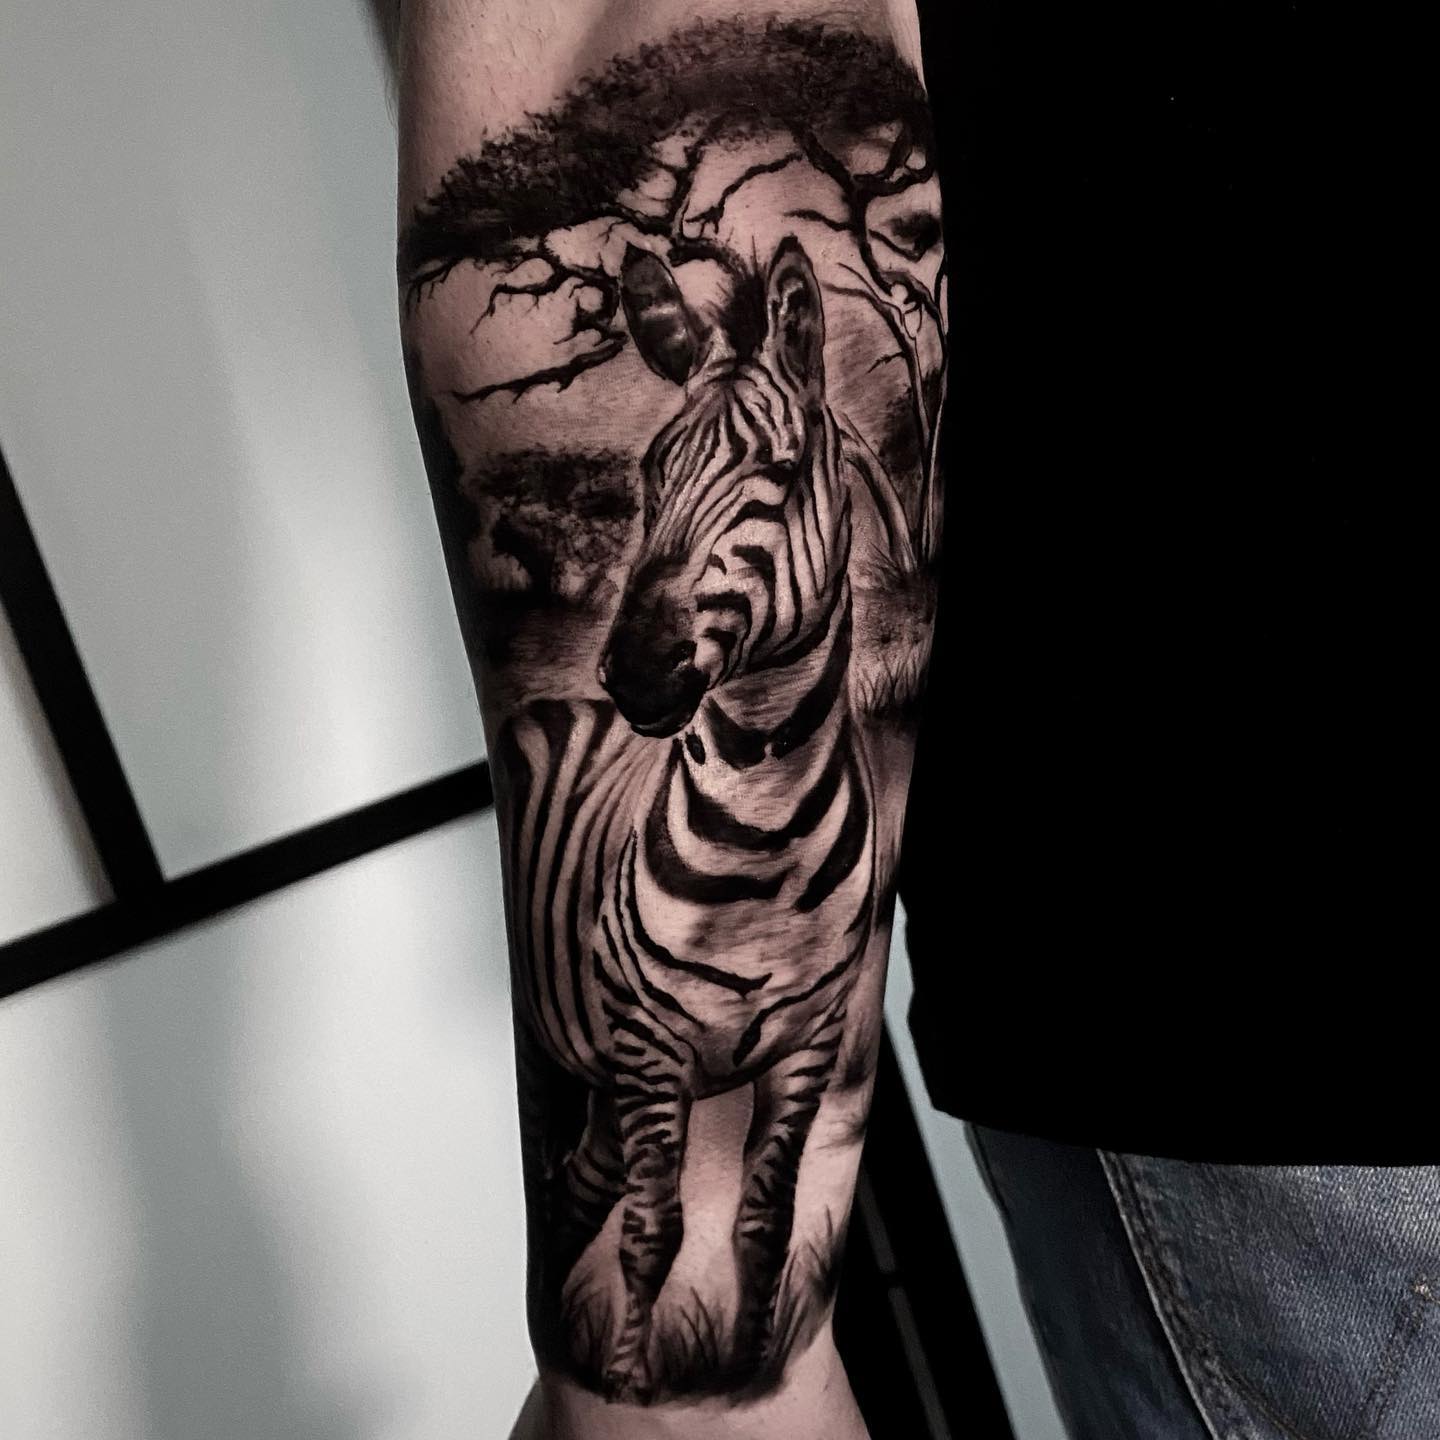 Zebra tattoo design by kesy ink